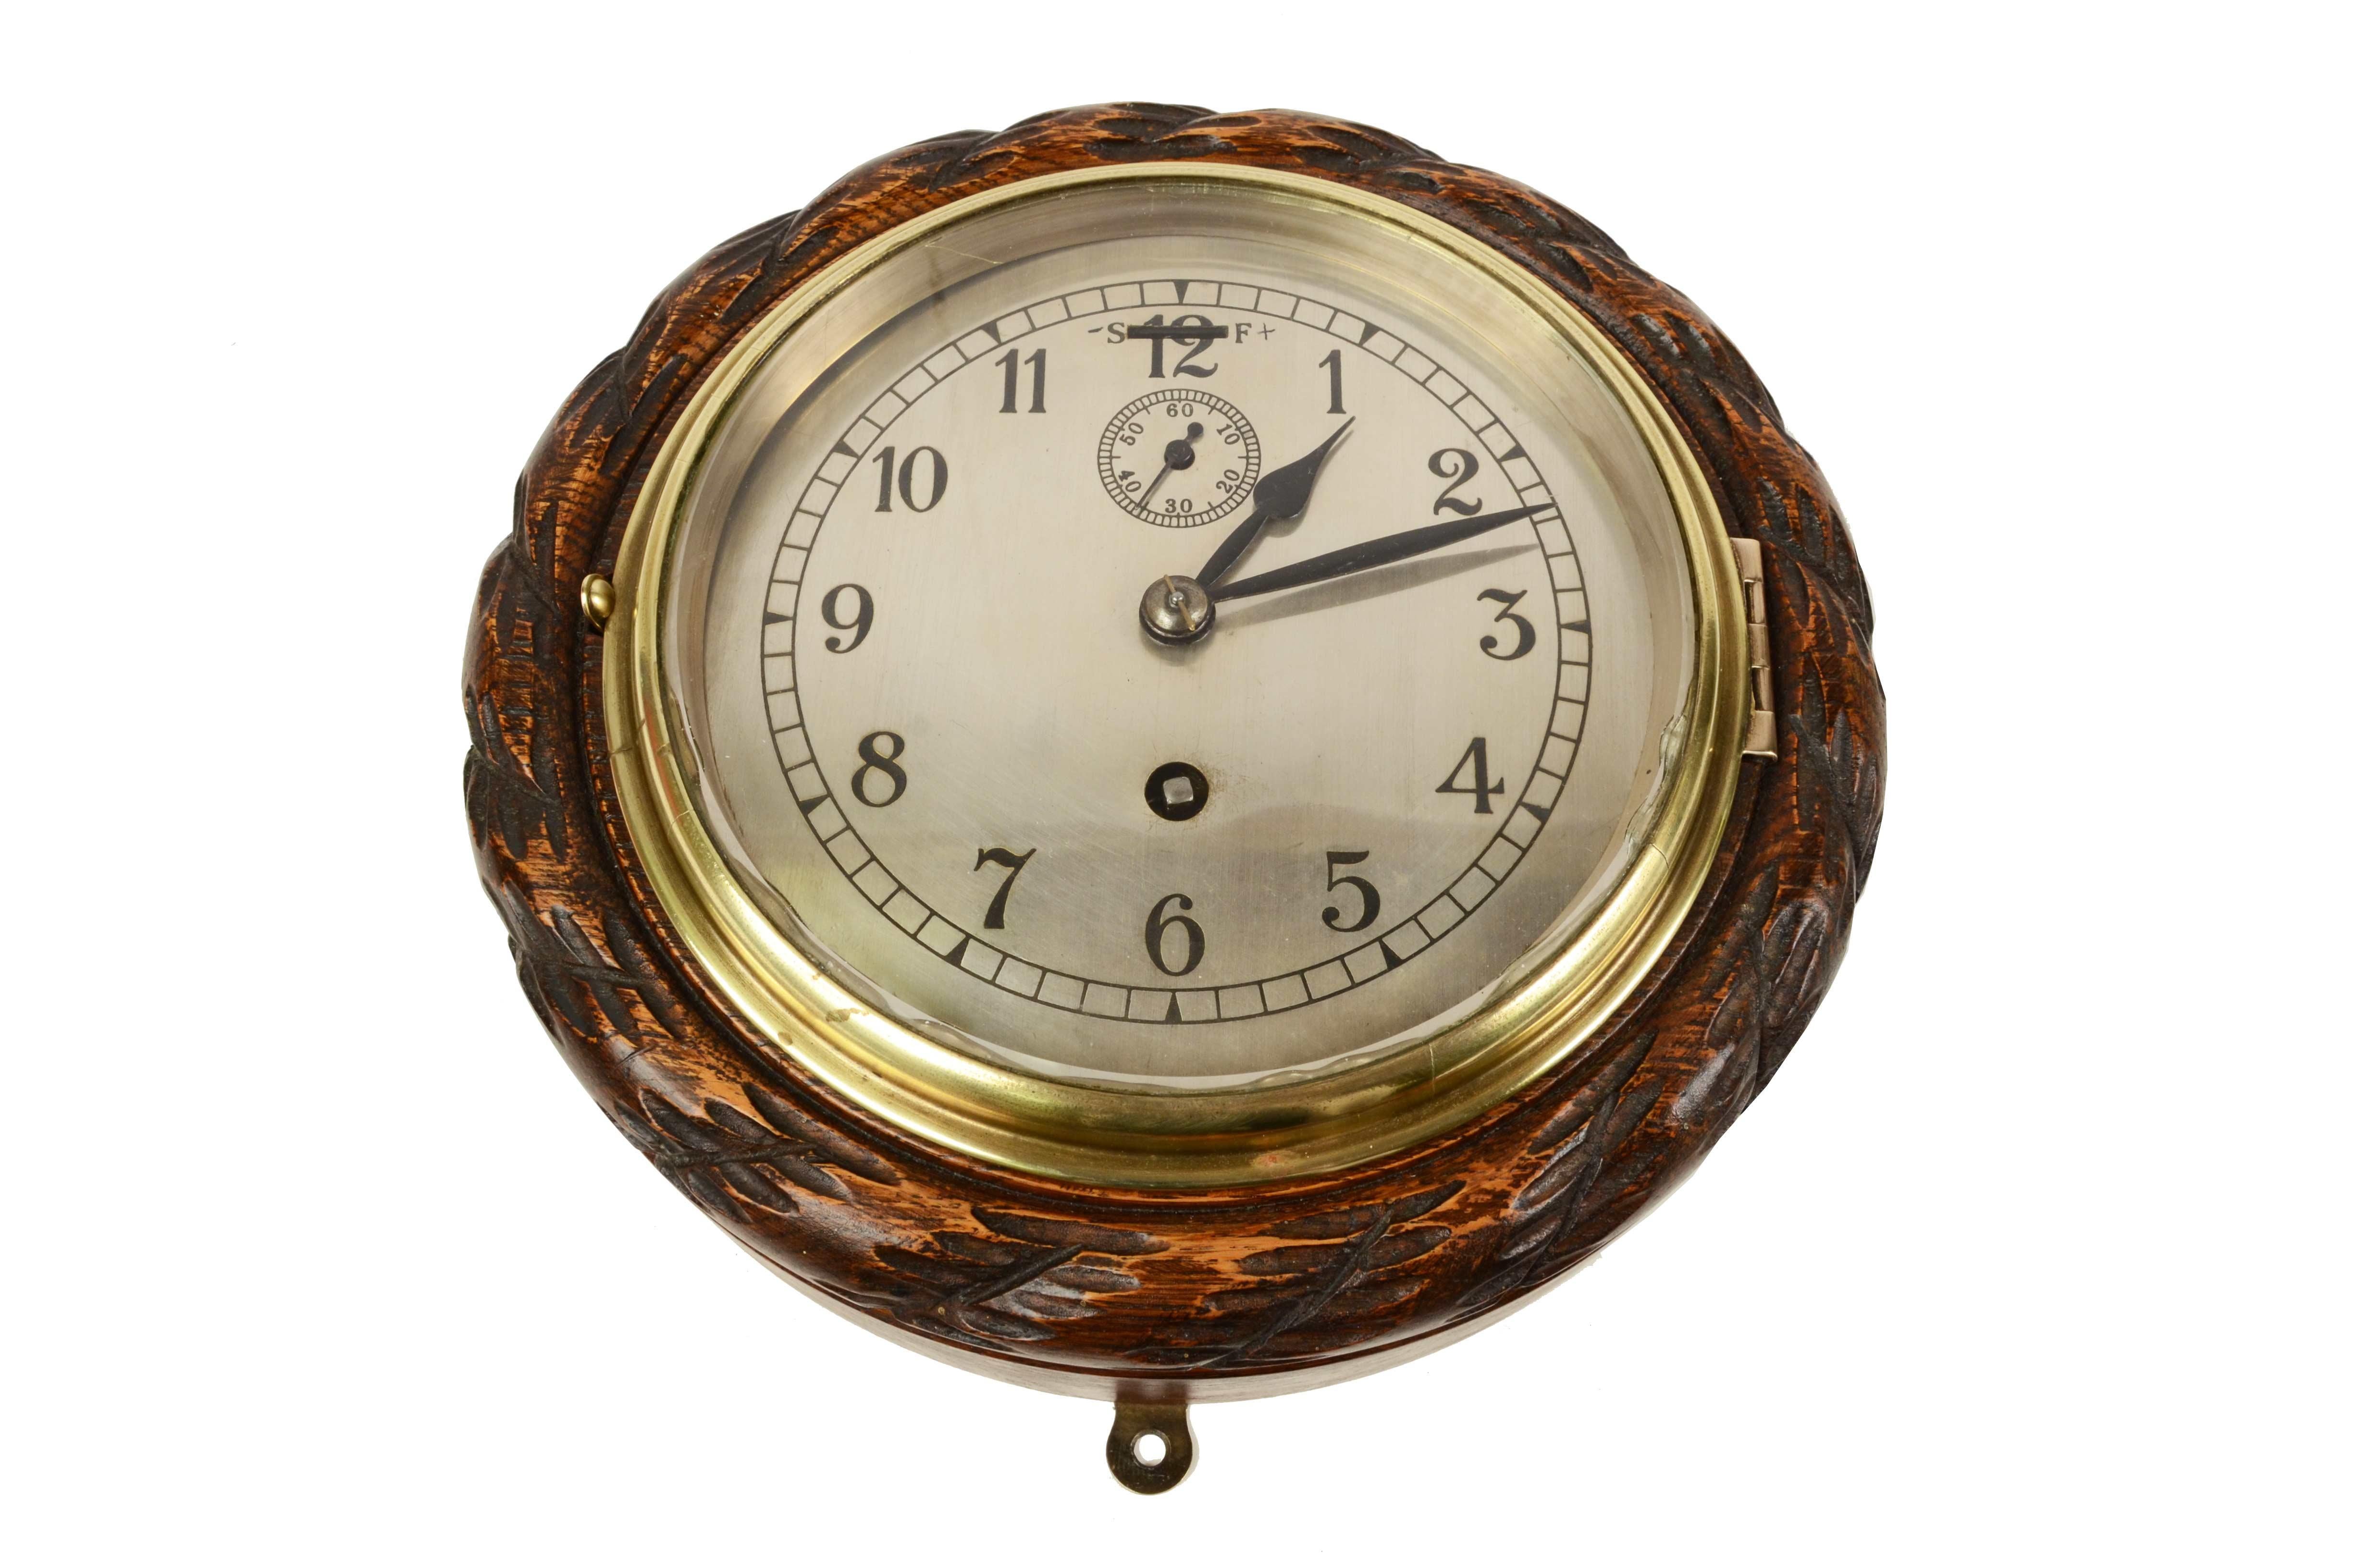 1930s Brass and Wood Shipboard Navigation Clock Antique Nautical Instrument 13